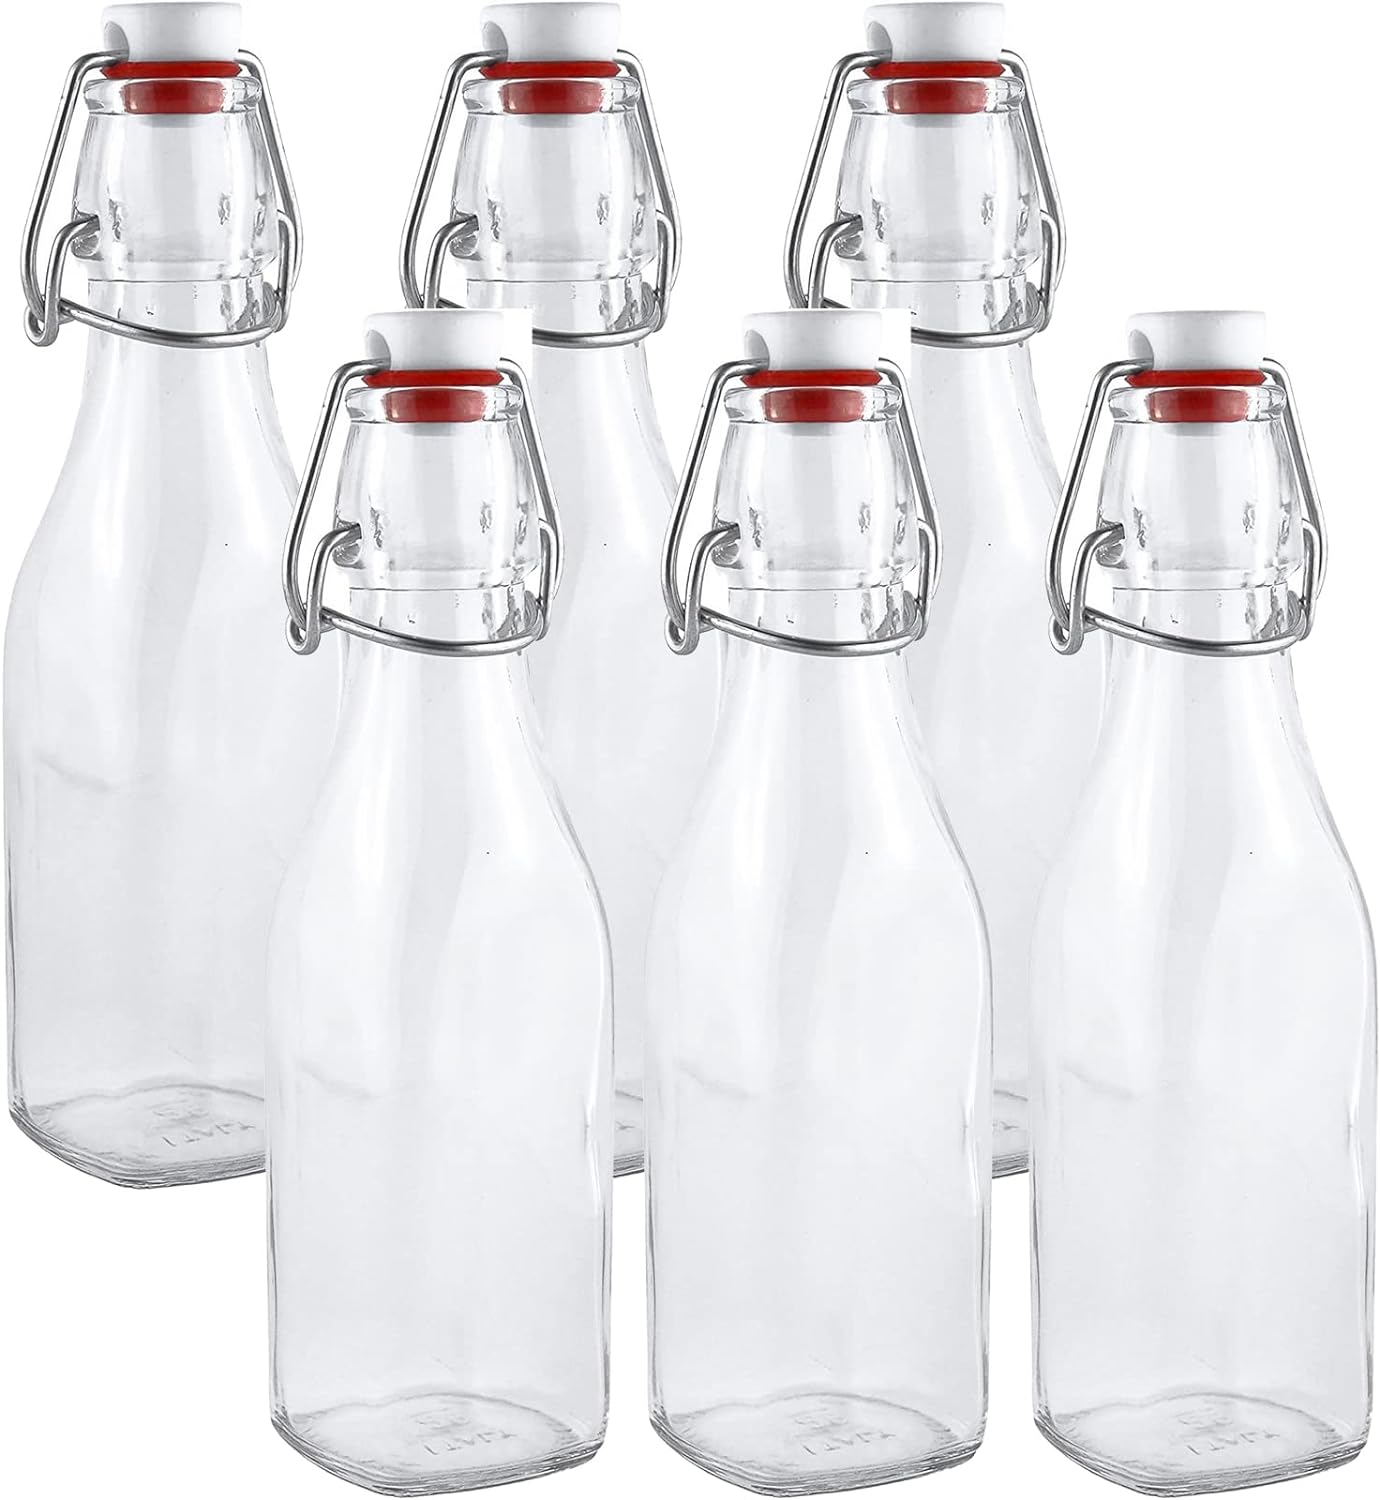 Quadra Bottles 8.5 Oz 15 Sets of Premium Commercial Grade Glass Square Bottle 